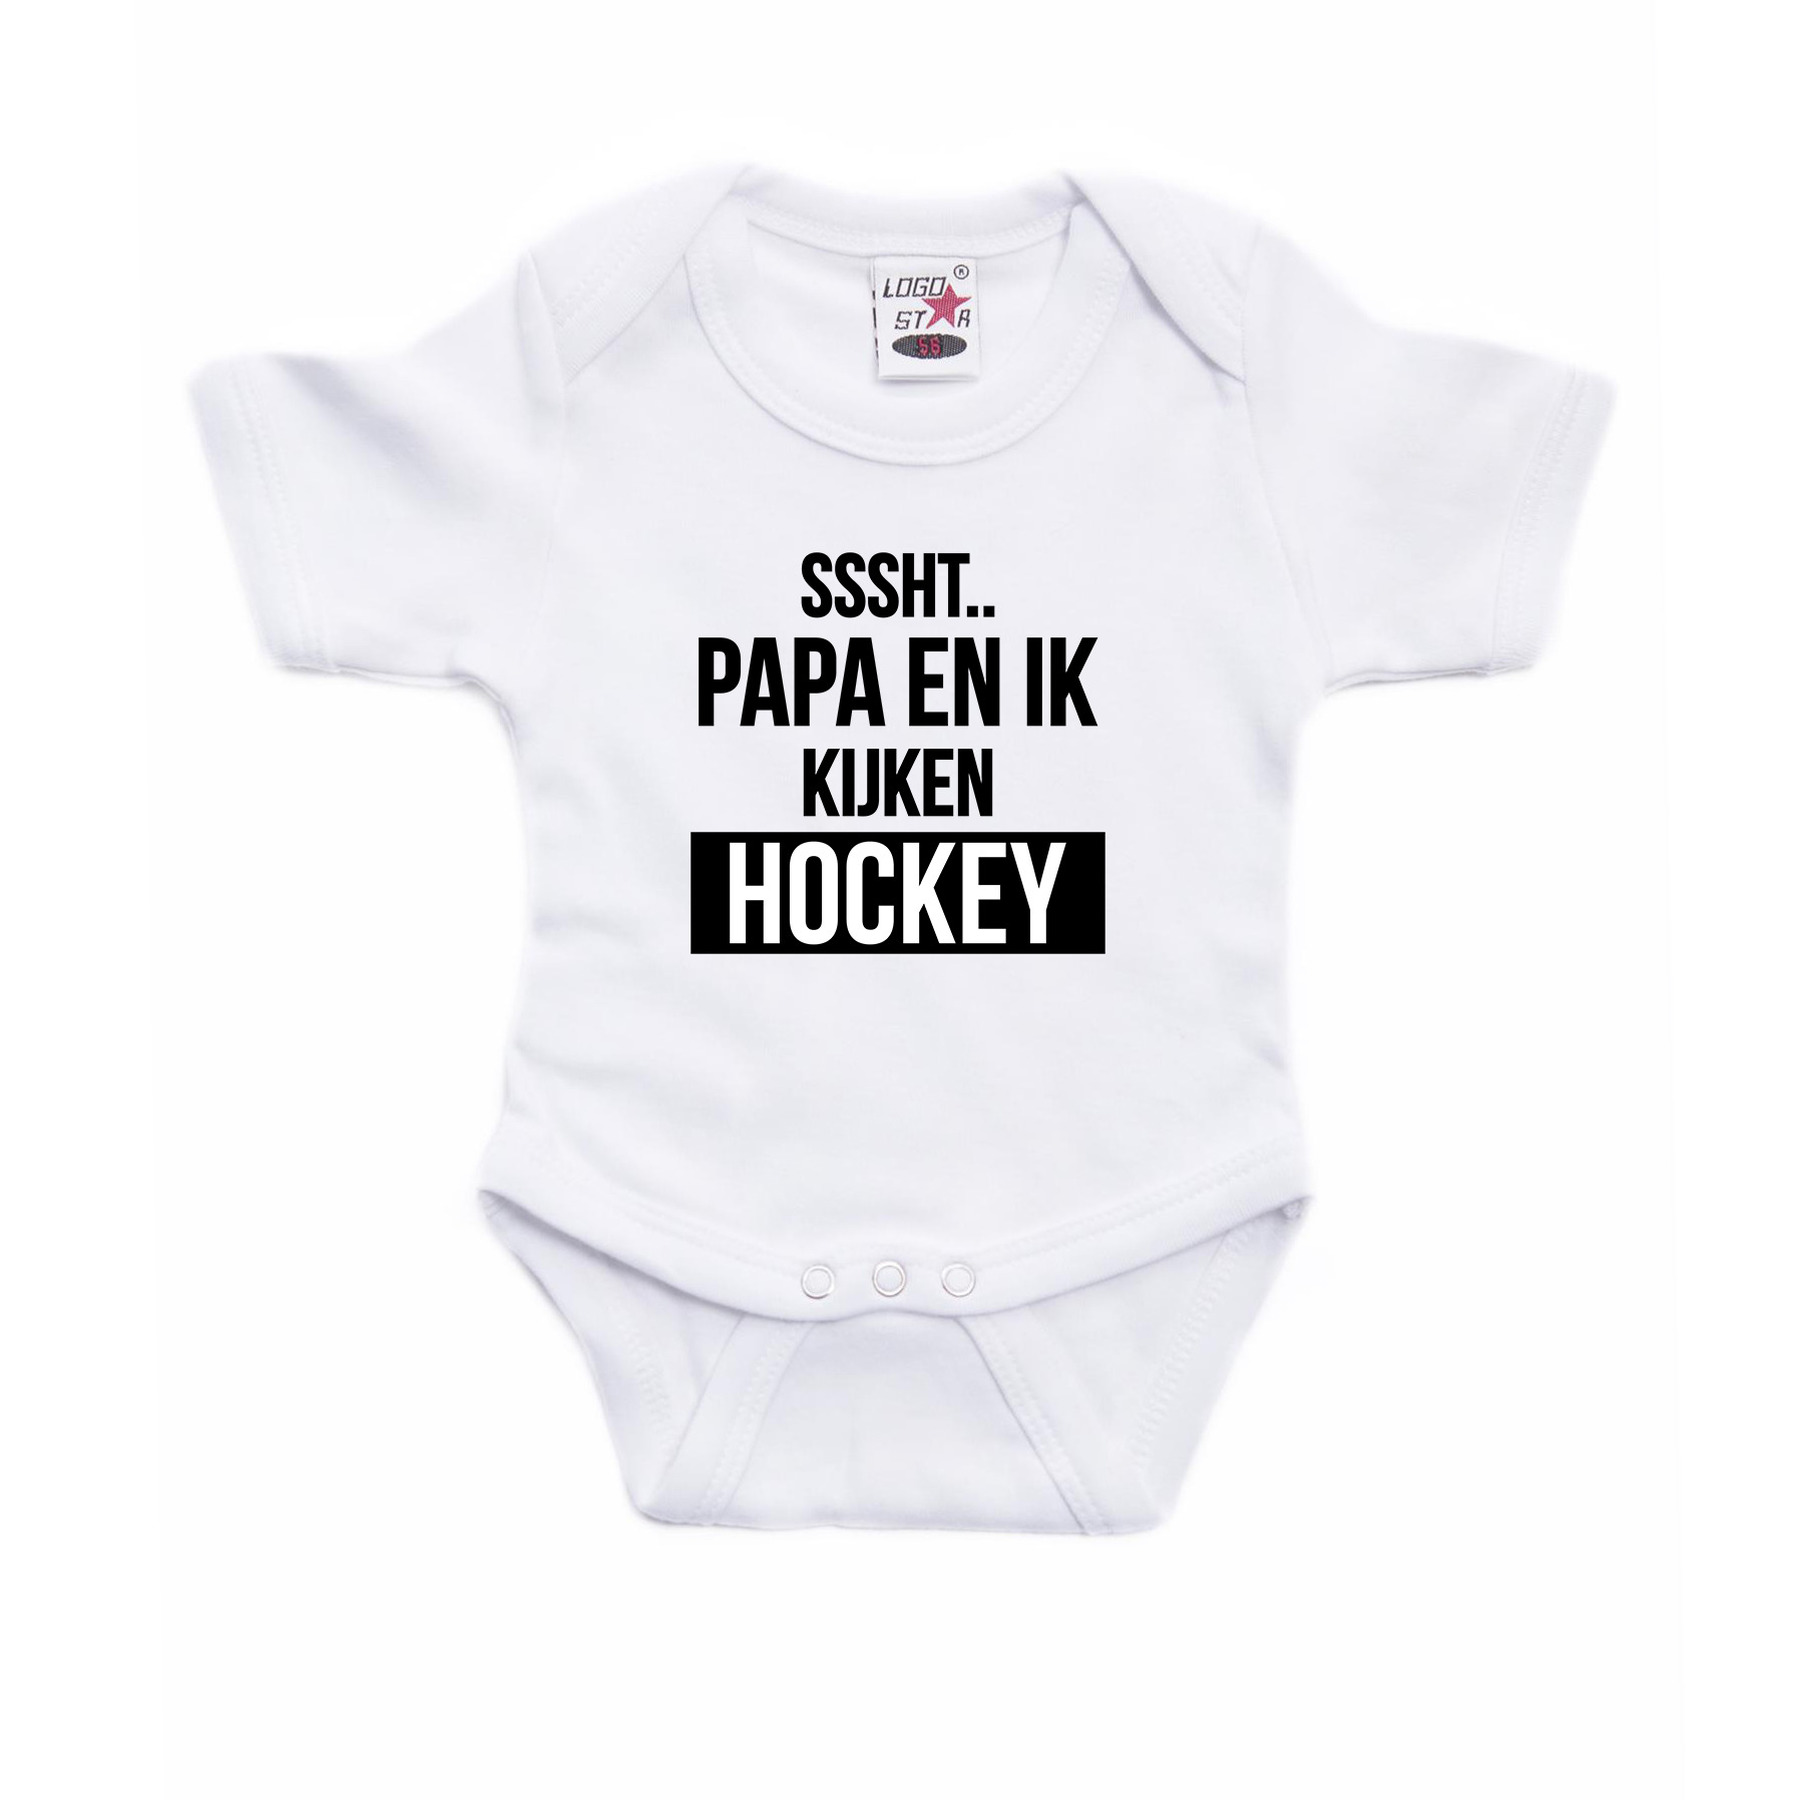 Sssht kijken hockey verkleed/cadeau baby rompertje wit jongens/meisjes EK - WK supporter